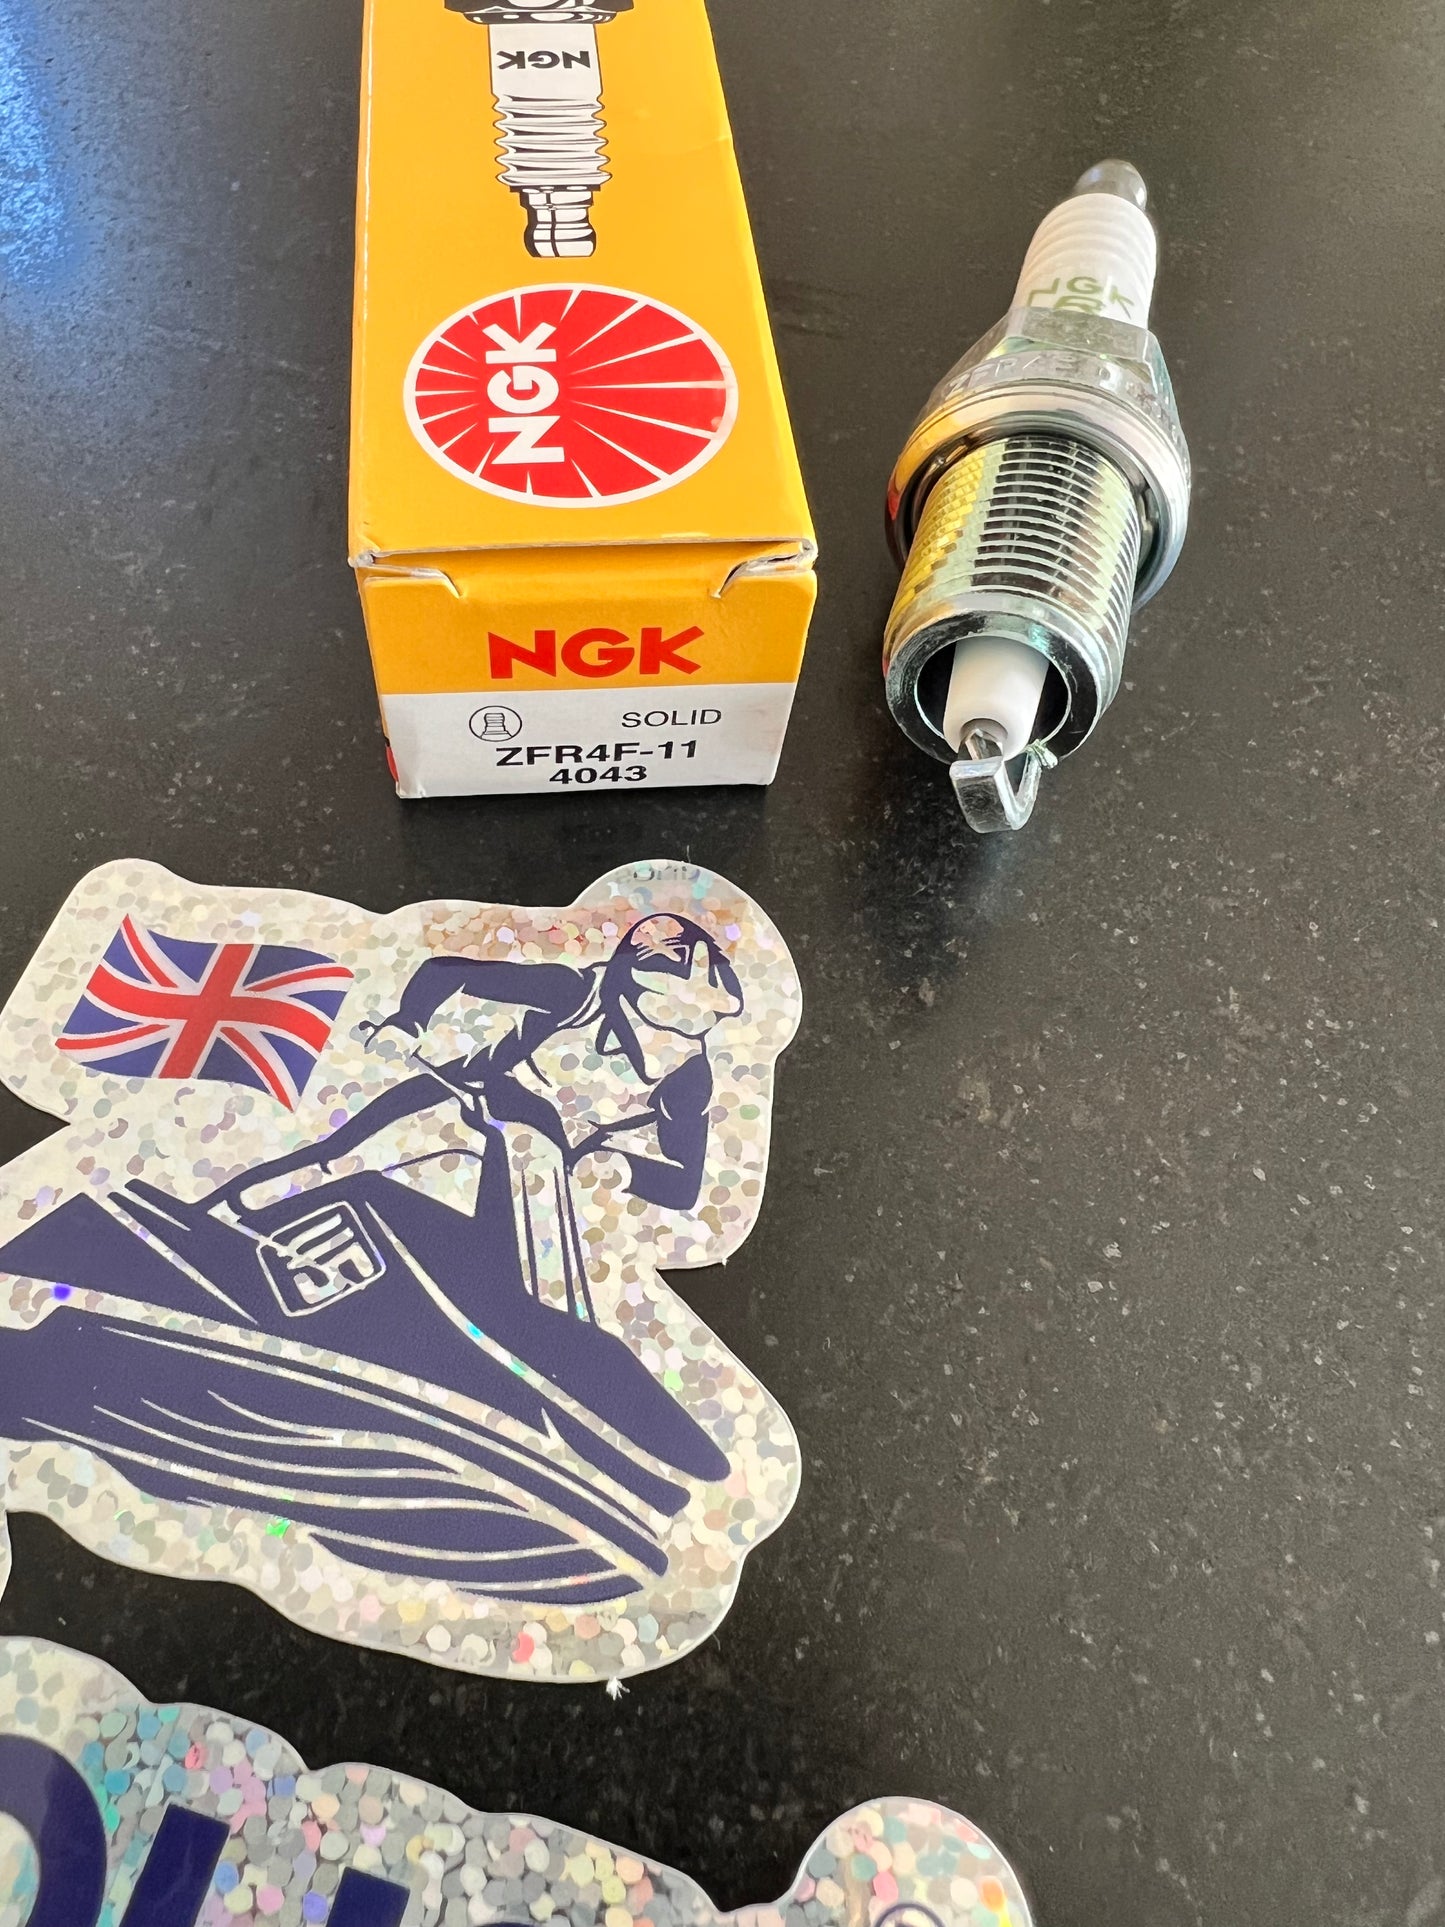 NGK R Spark Plug for Jet Ski Seadoo 951 Direct Injection DI Sea-doo solid tip 4043